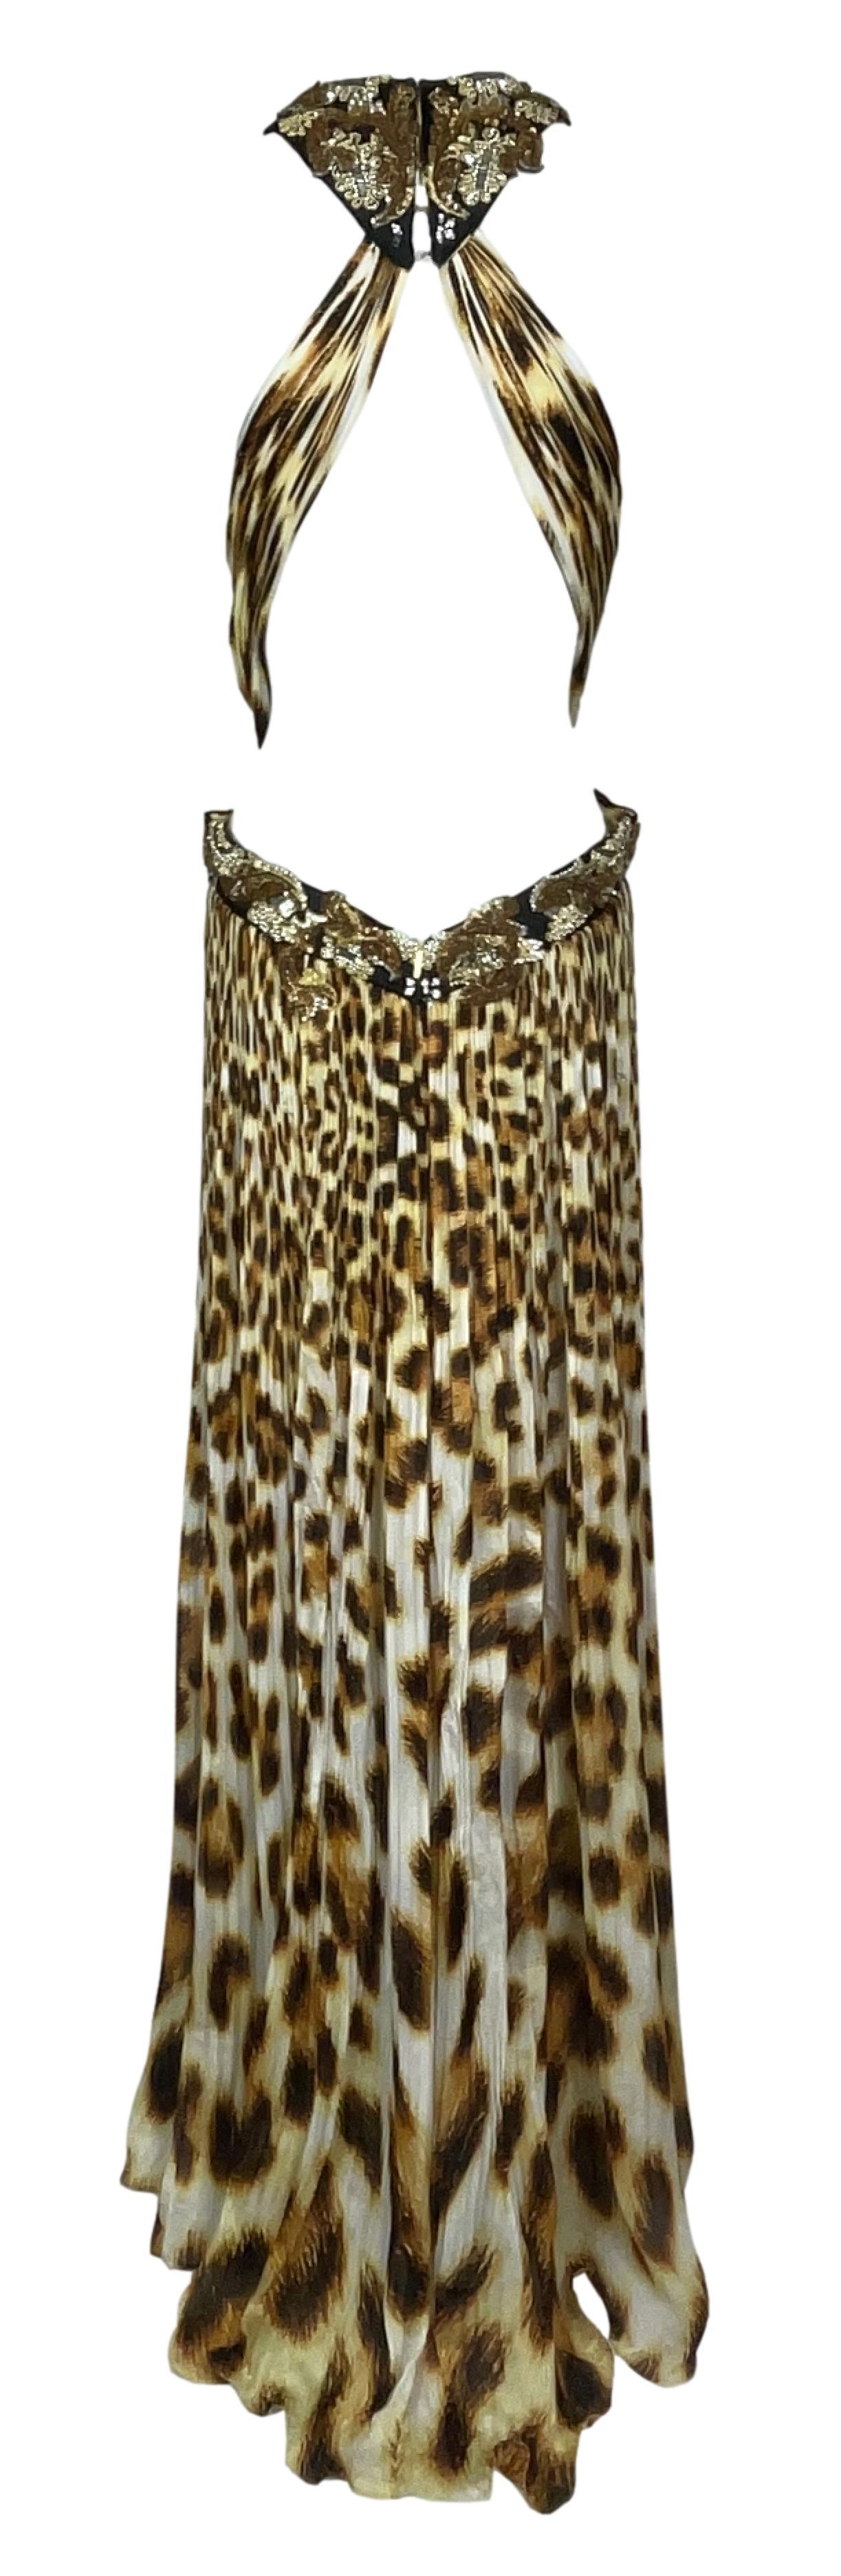 Women's S/S 2007 Roberto Cavalli Runway Backless Embellished Silk Leopard Gown Dress